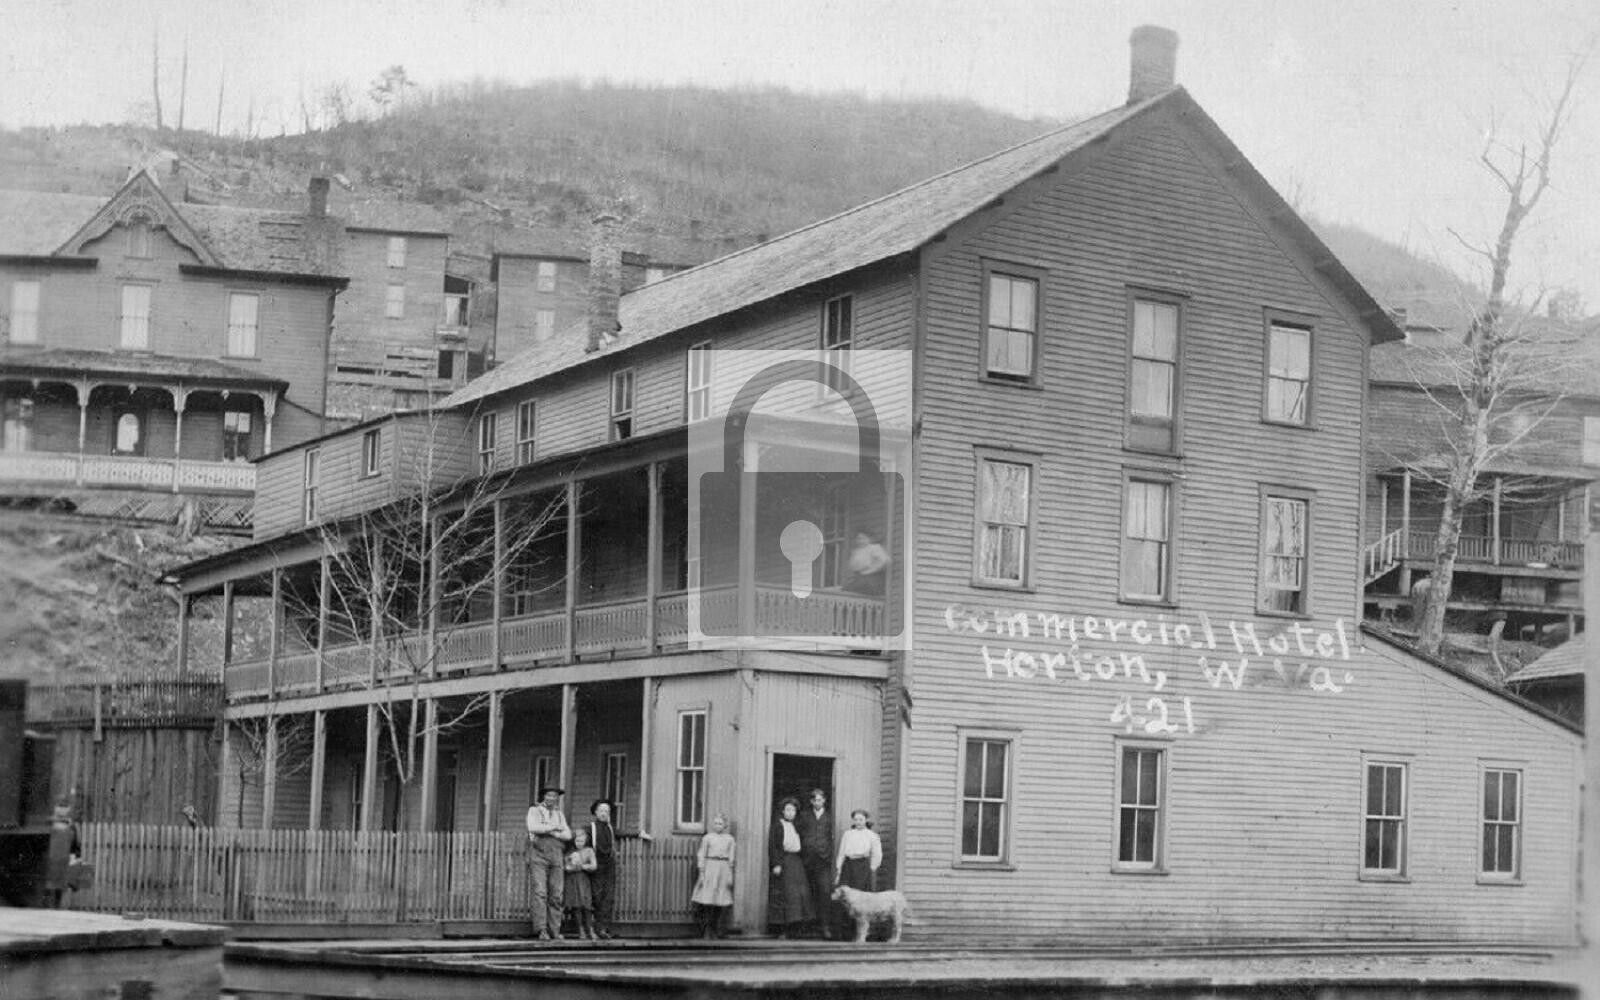 Commercial Hotel Randolph County Horton West Virginia WV Reprint Postcard